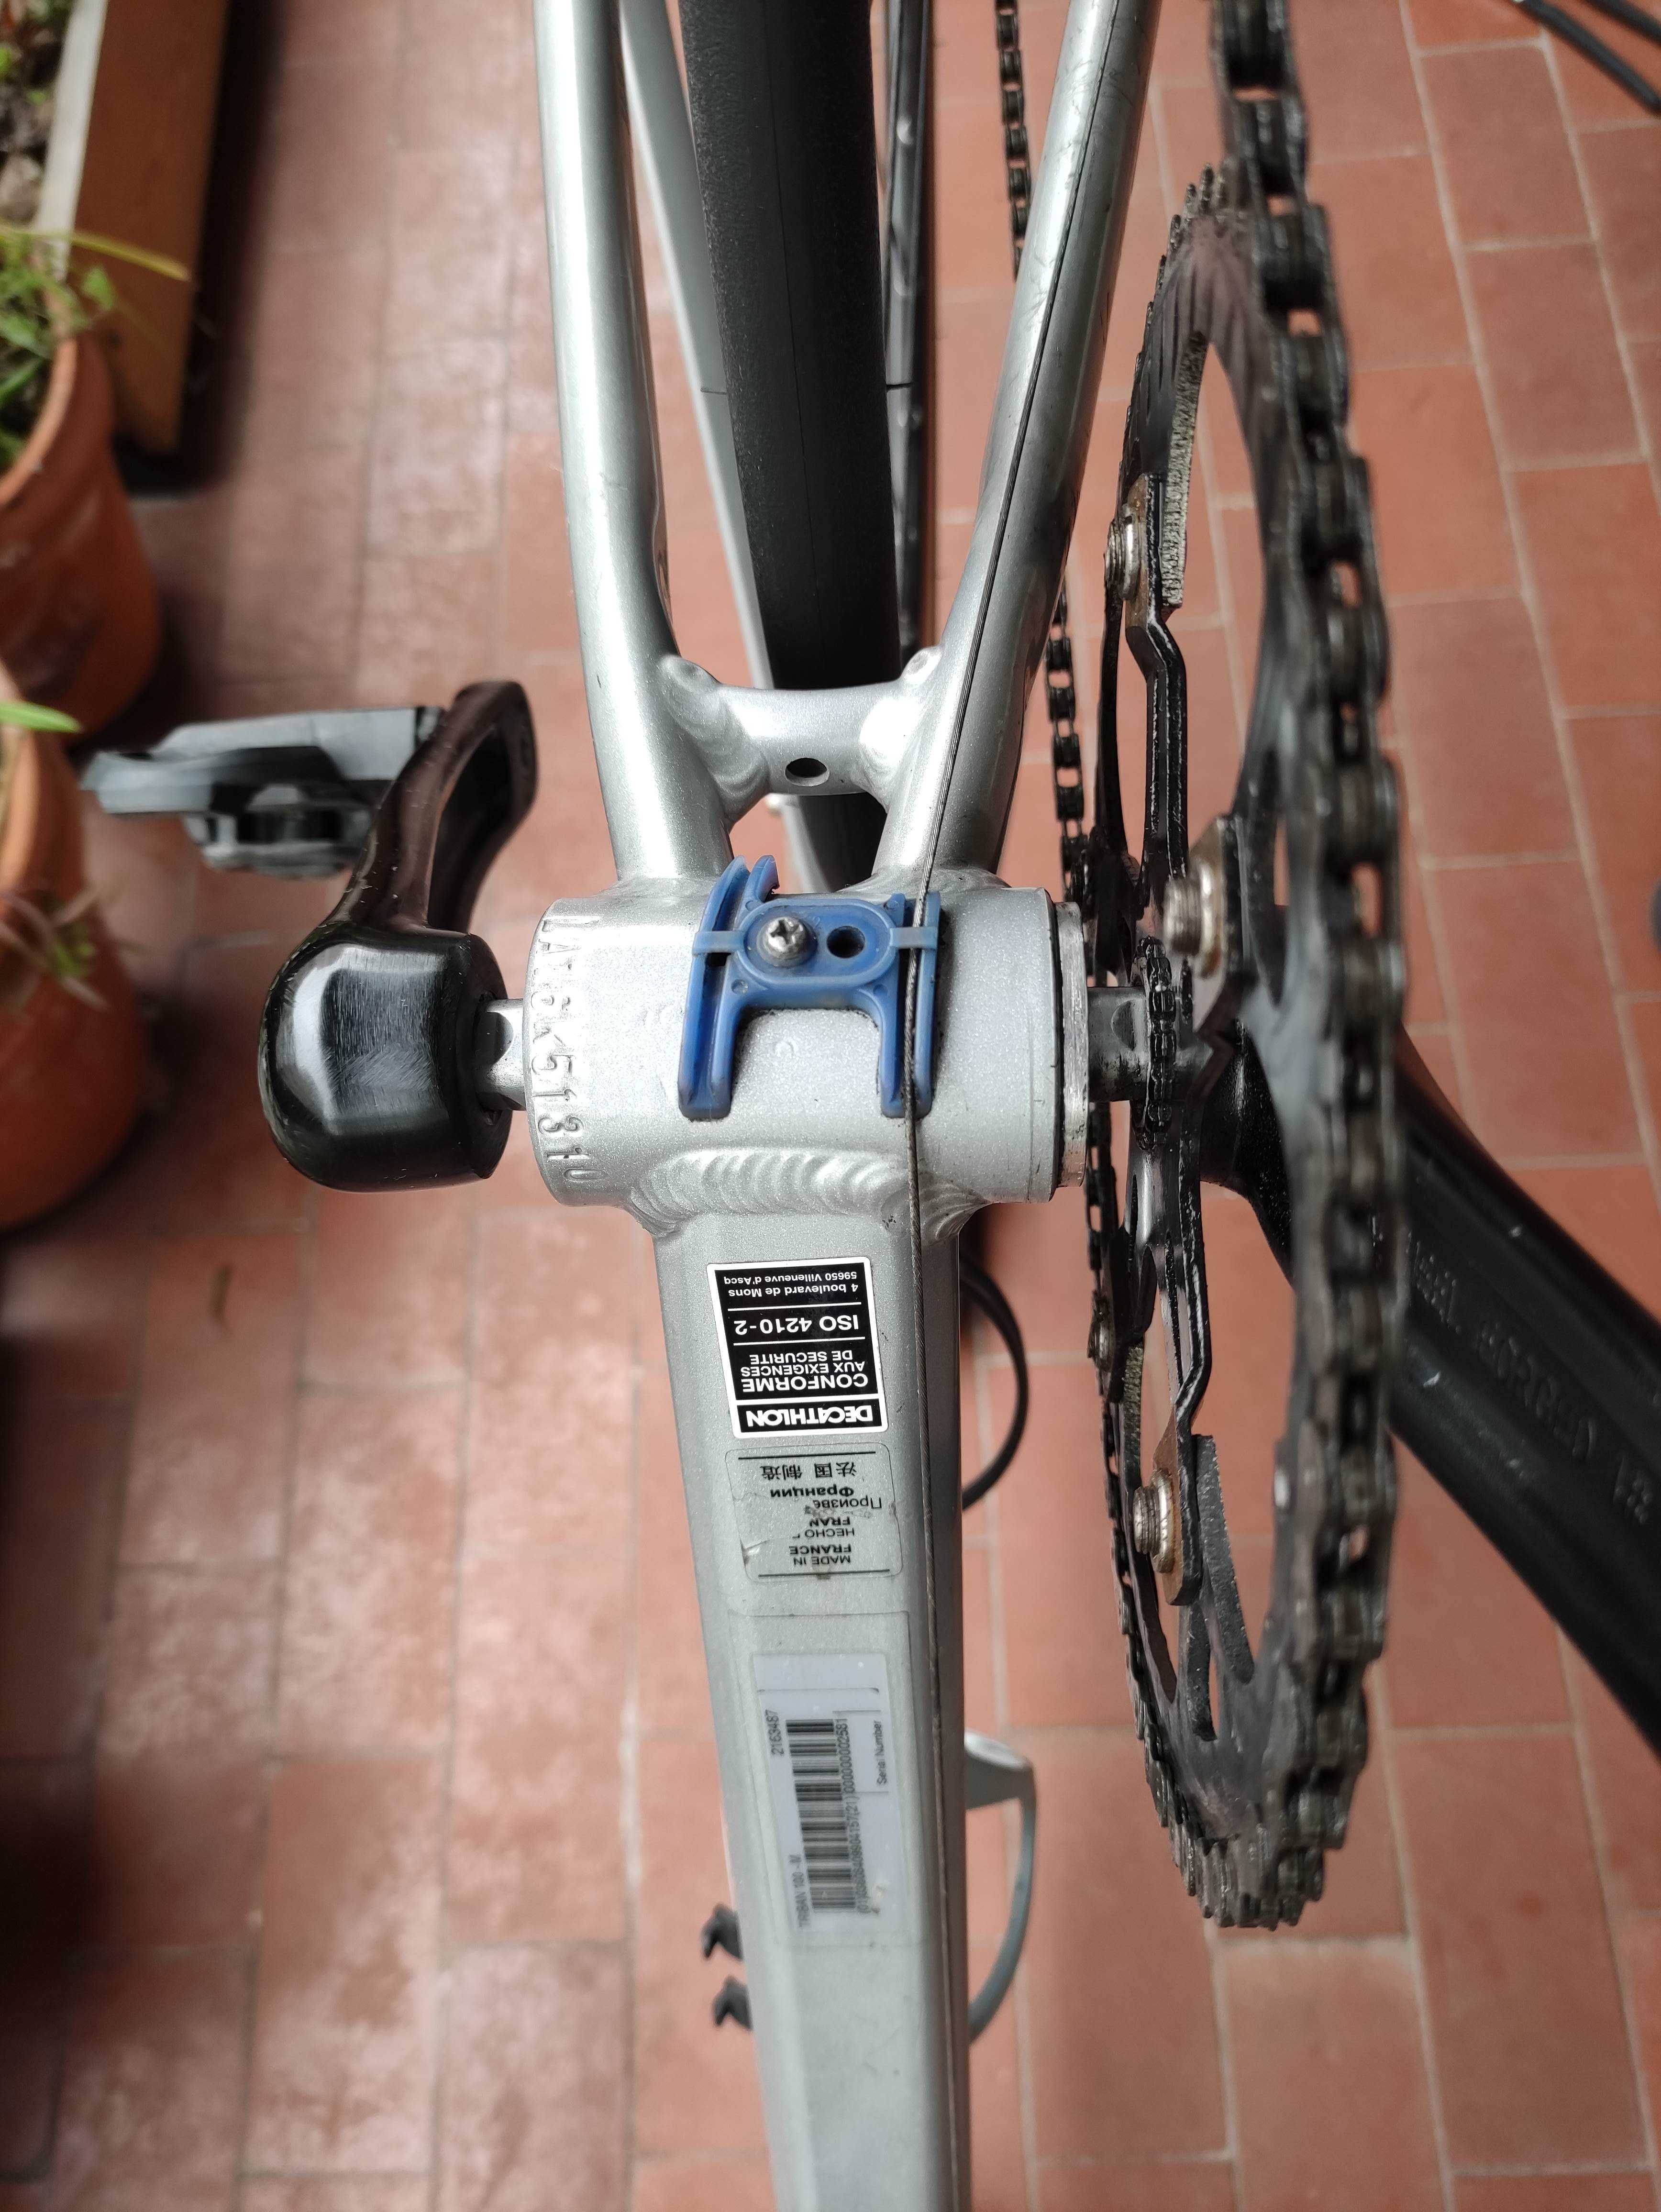 Bicicleta de estrada RC100 TRIBAN cinza alterada